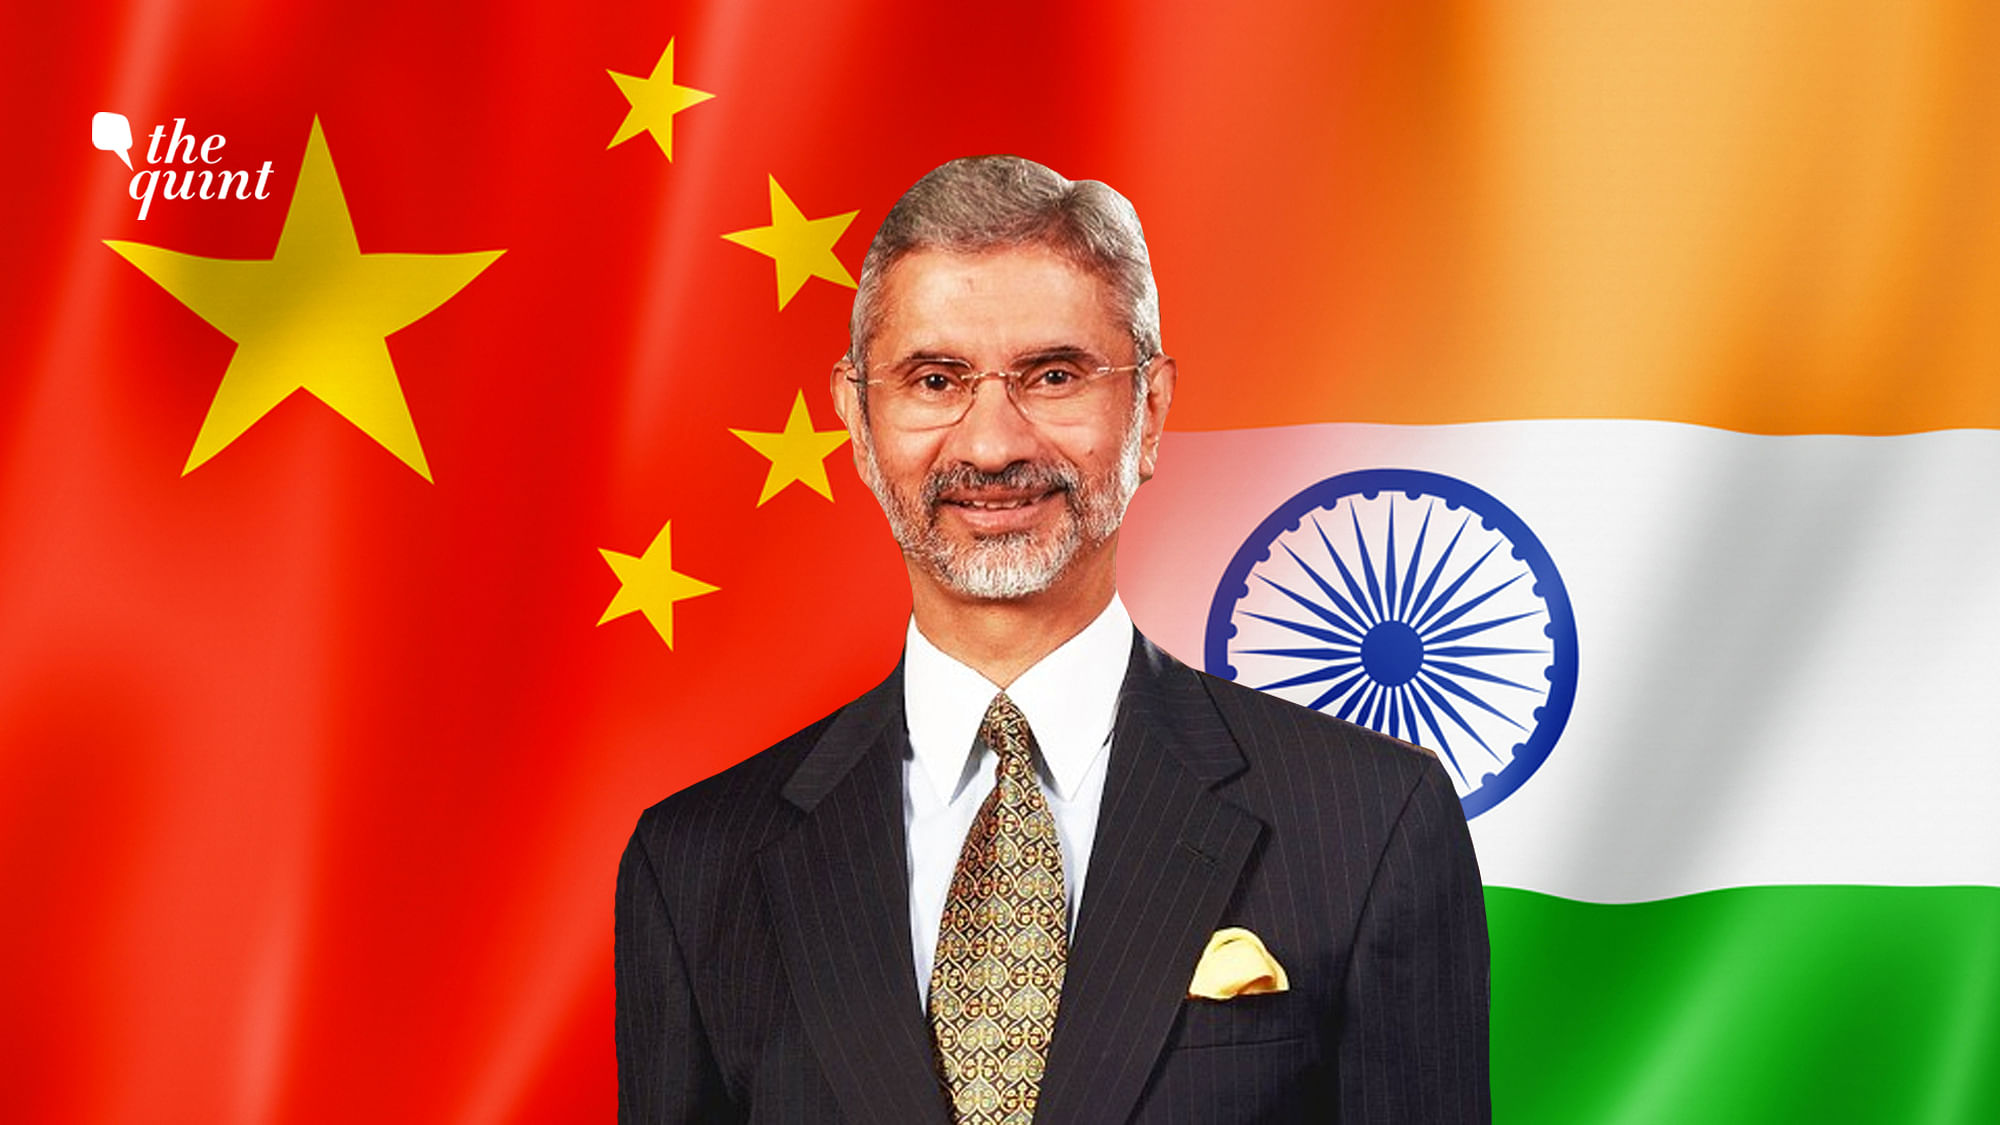 Image of EAM S Jaishankar and India-China flags used for representational purposes.